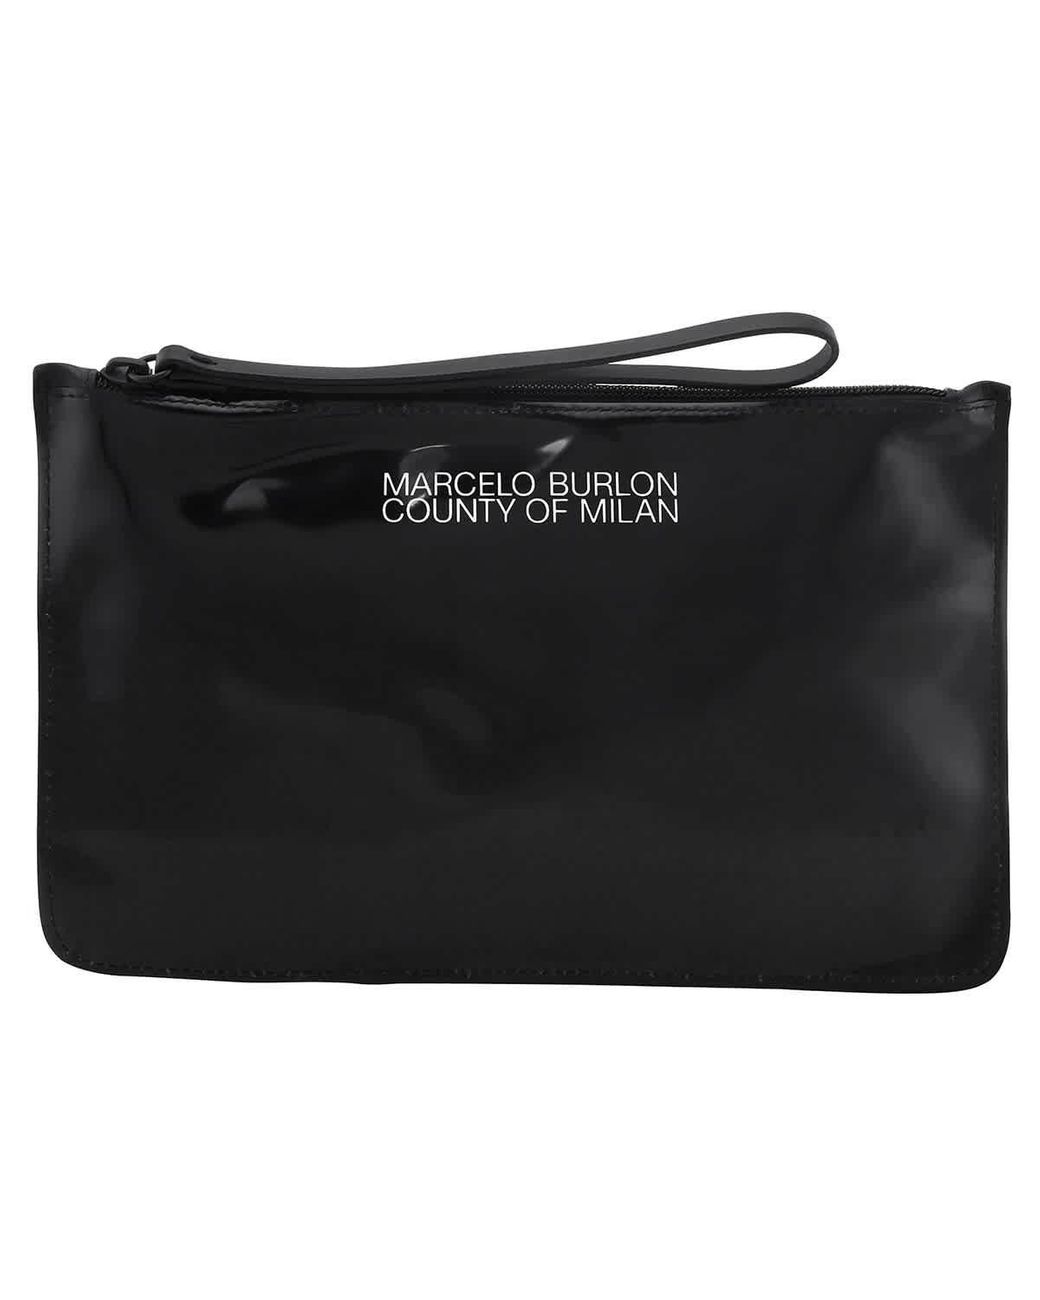 Marcelo Burlon Logo Pvc Clutch Bag in Black for Men